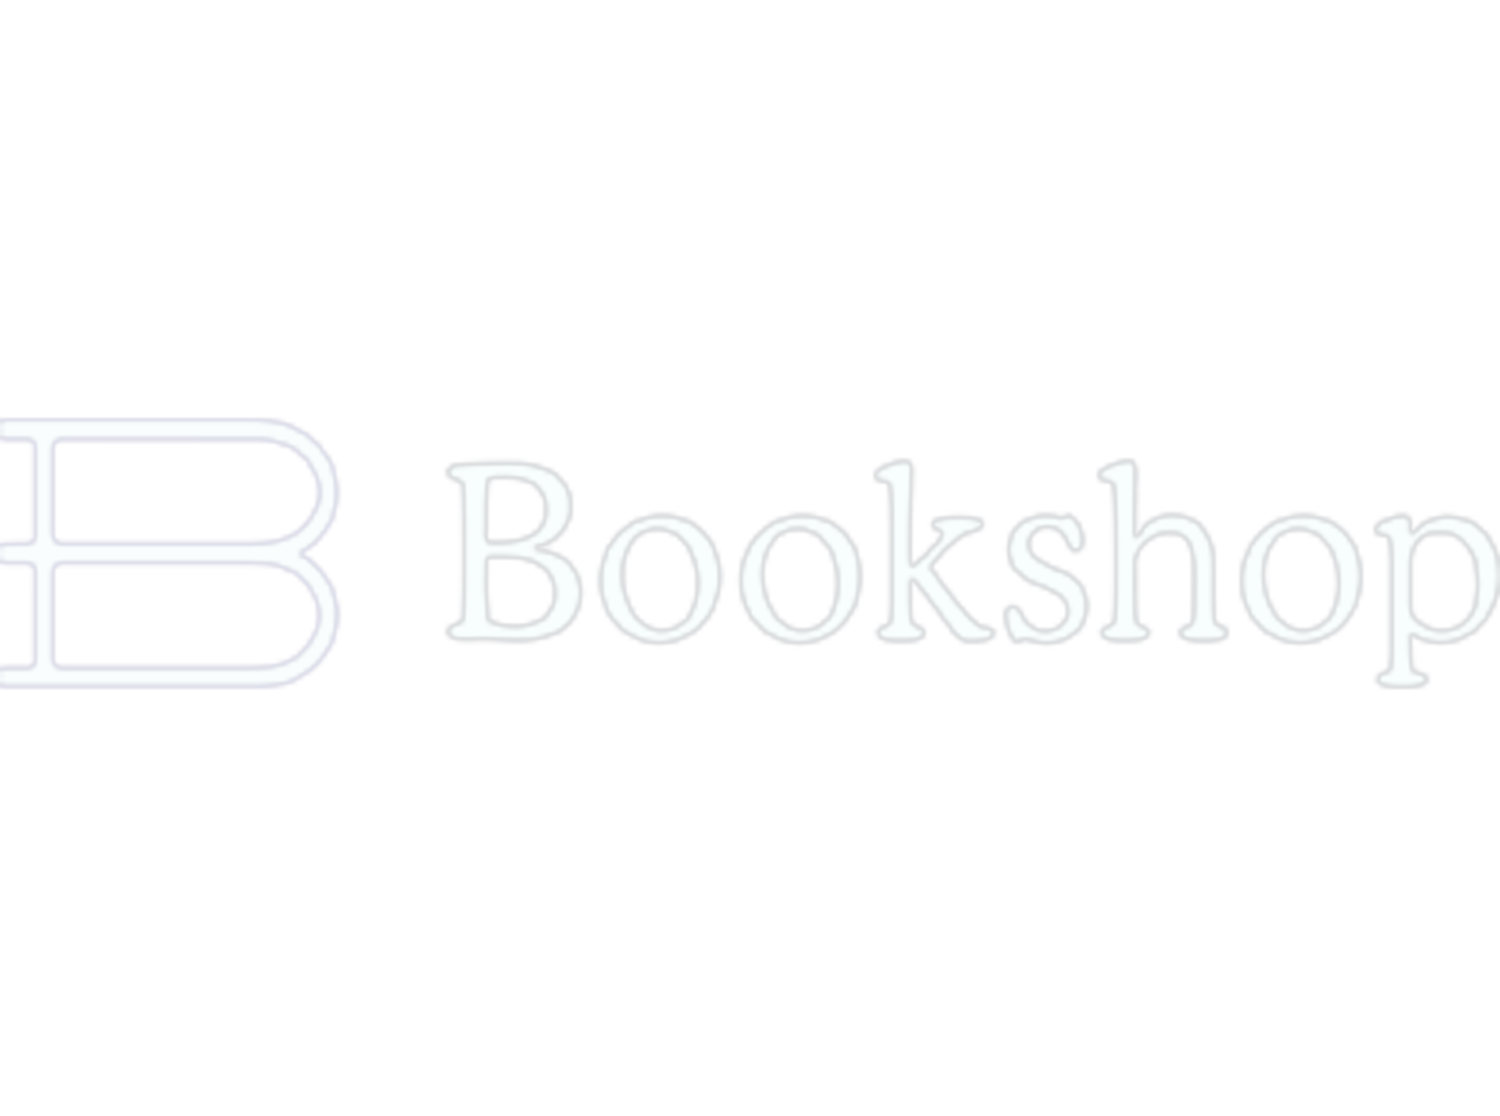 Bookshoplogo2500.png